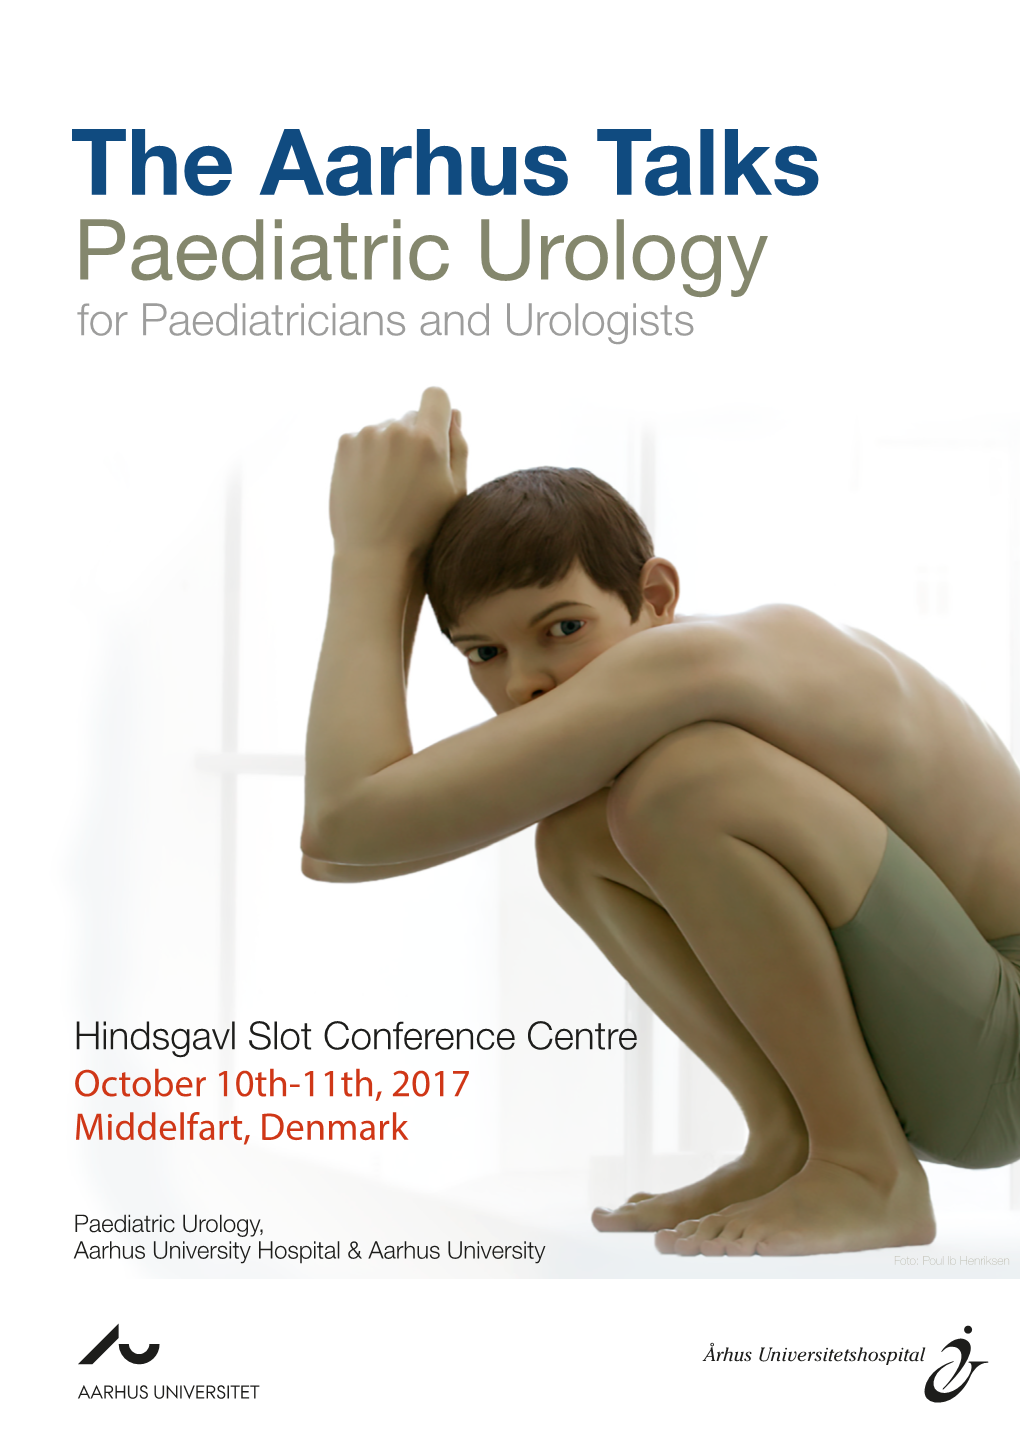 The Aarhus Talks Paediatric Urology for Paediatricians and Urologists